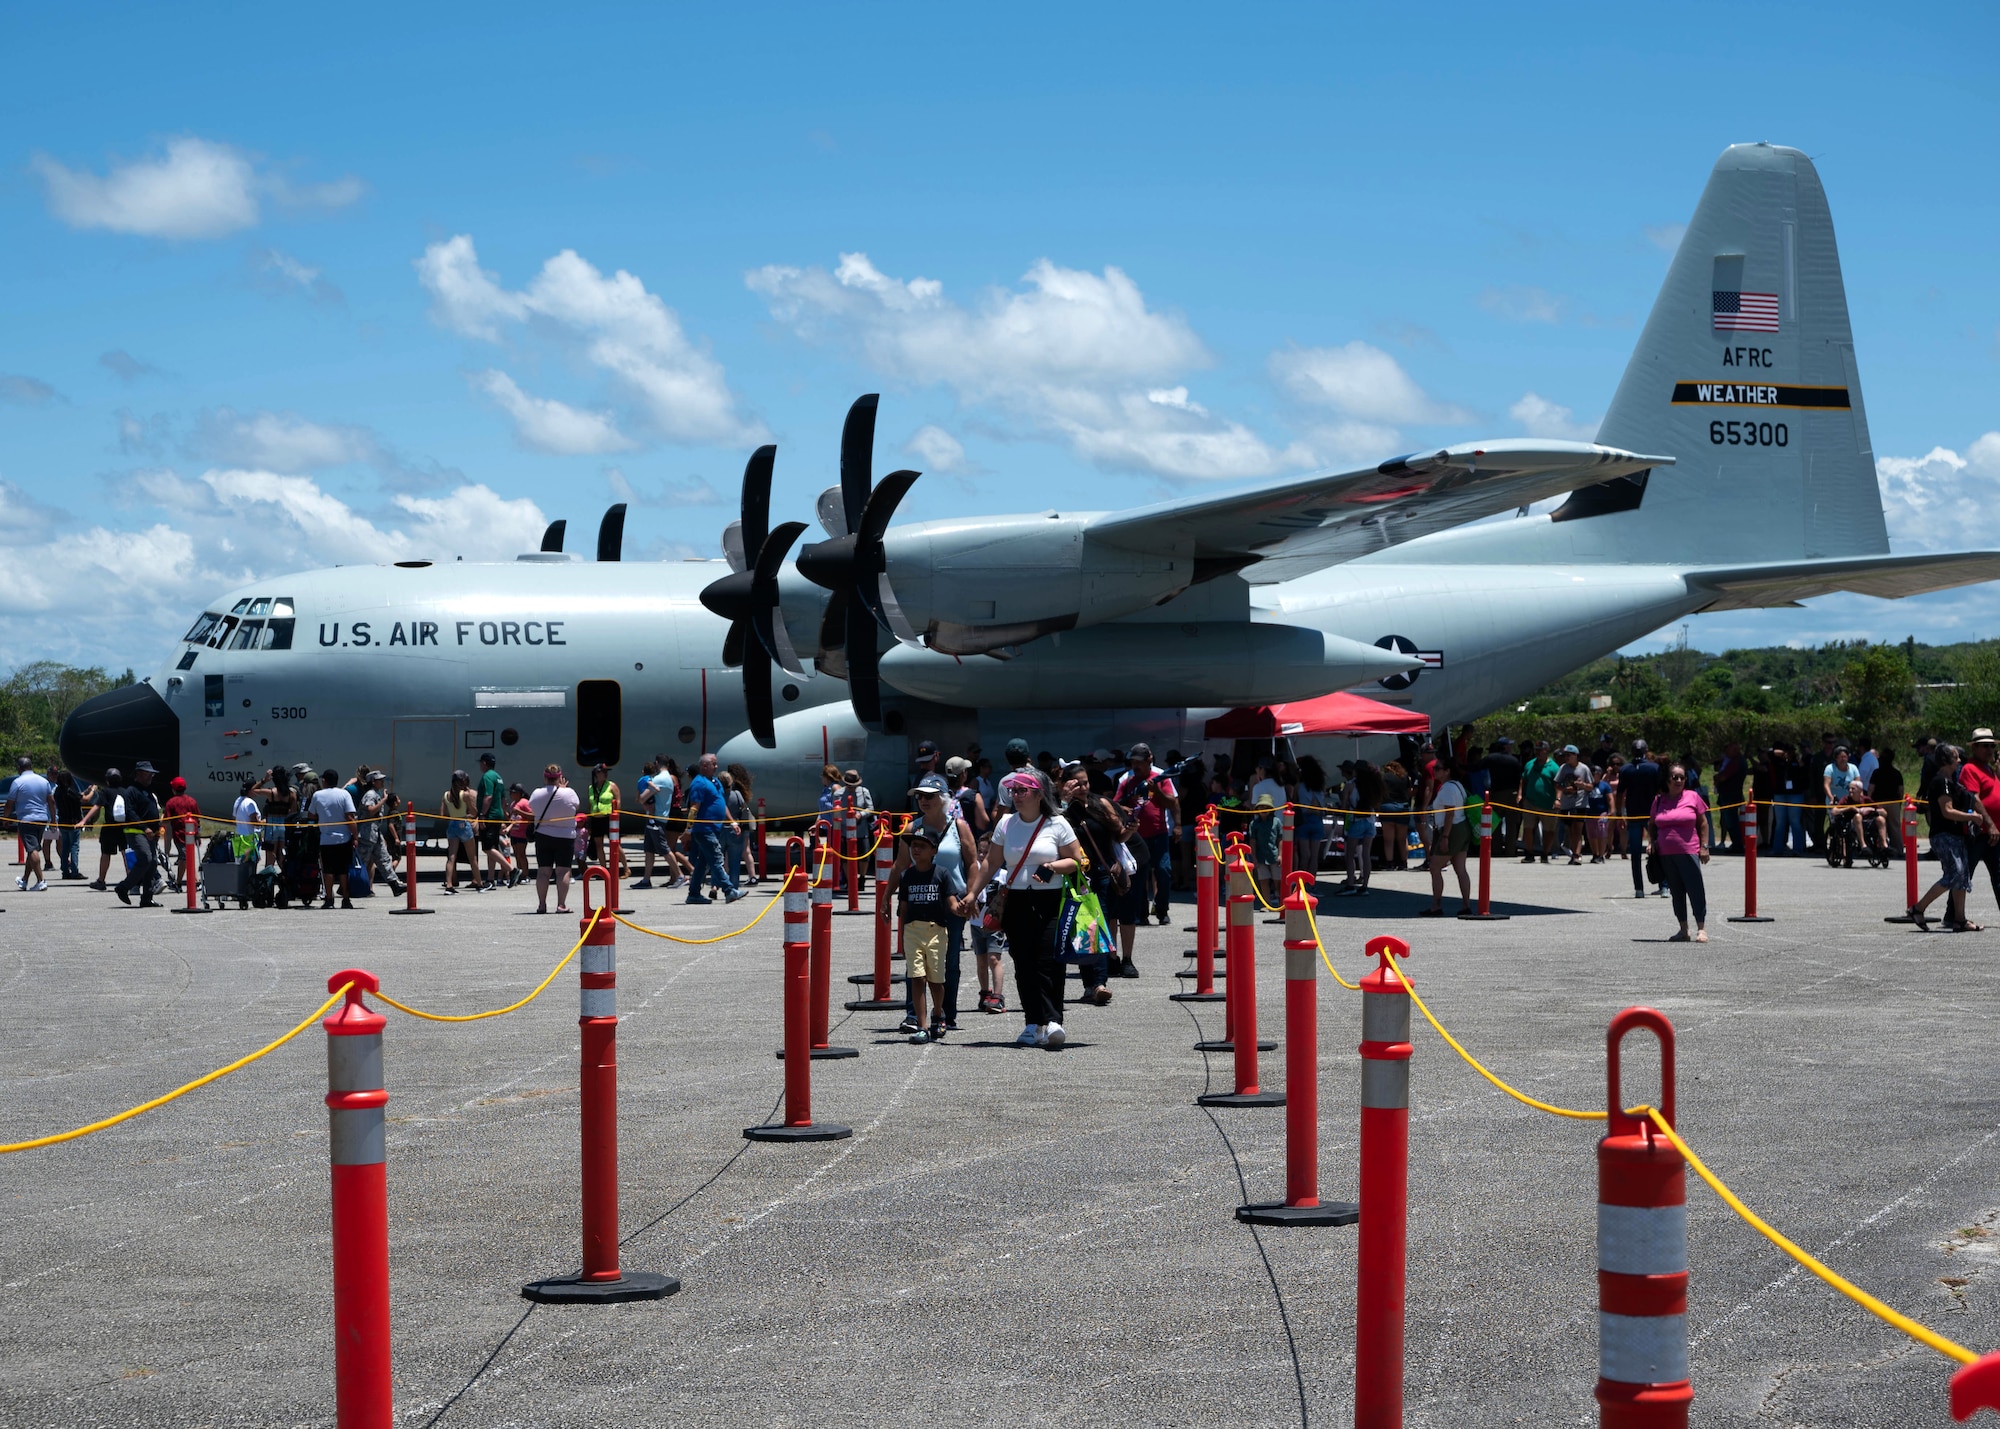 WC-130J aircraft on flightline in Puerto Rico